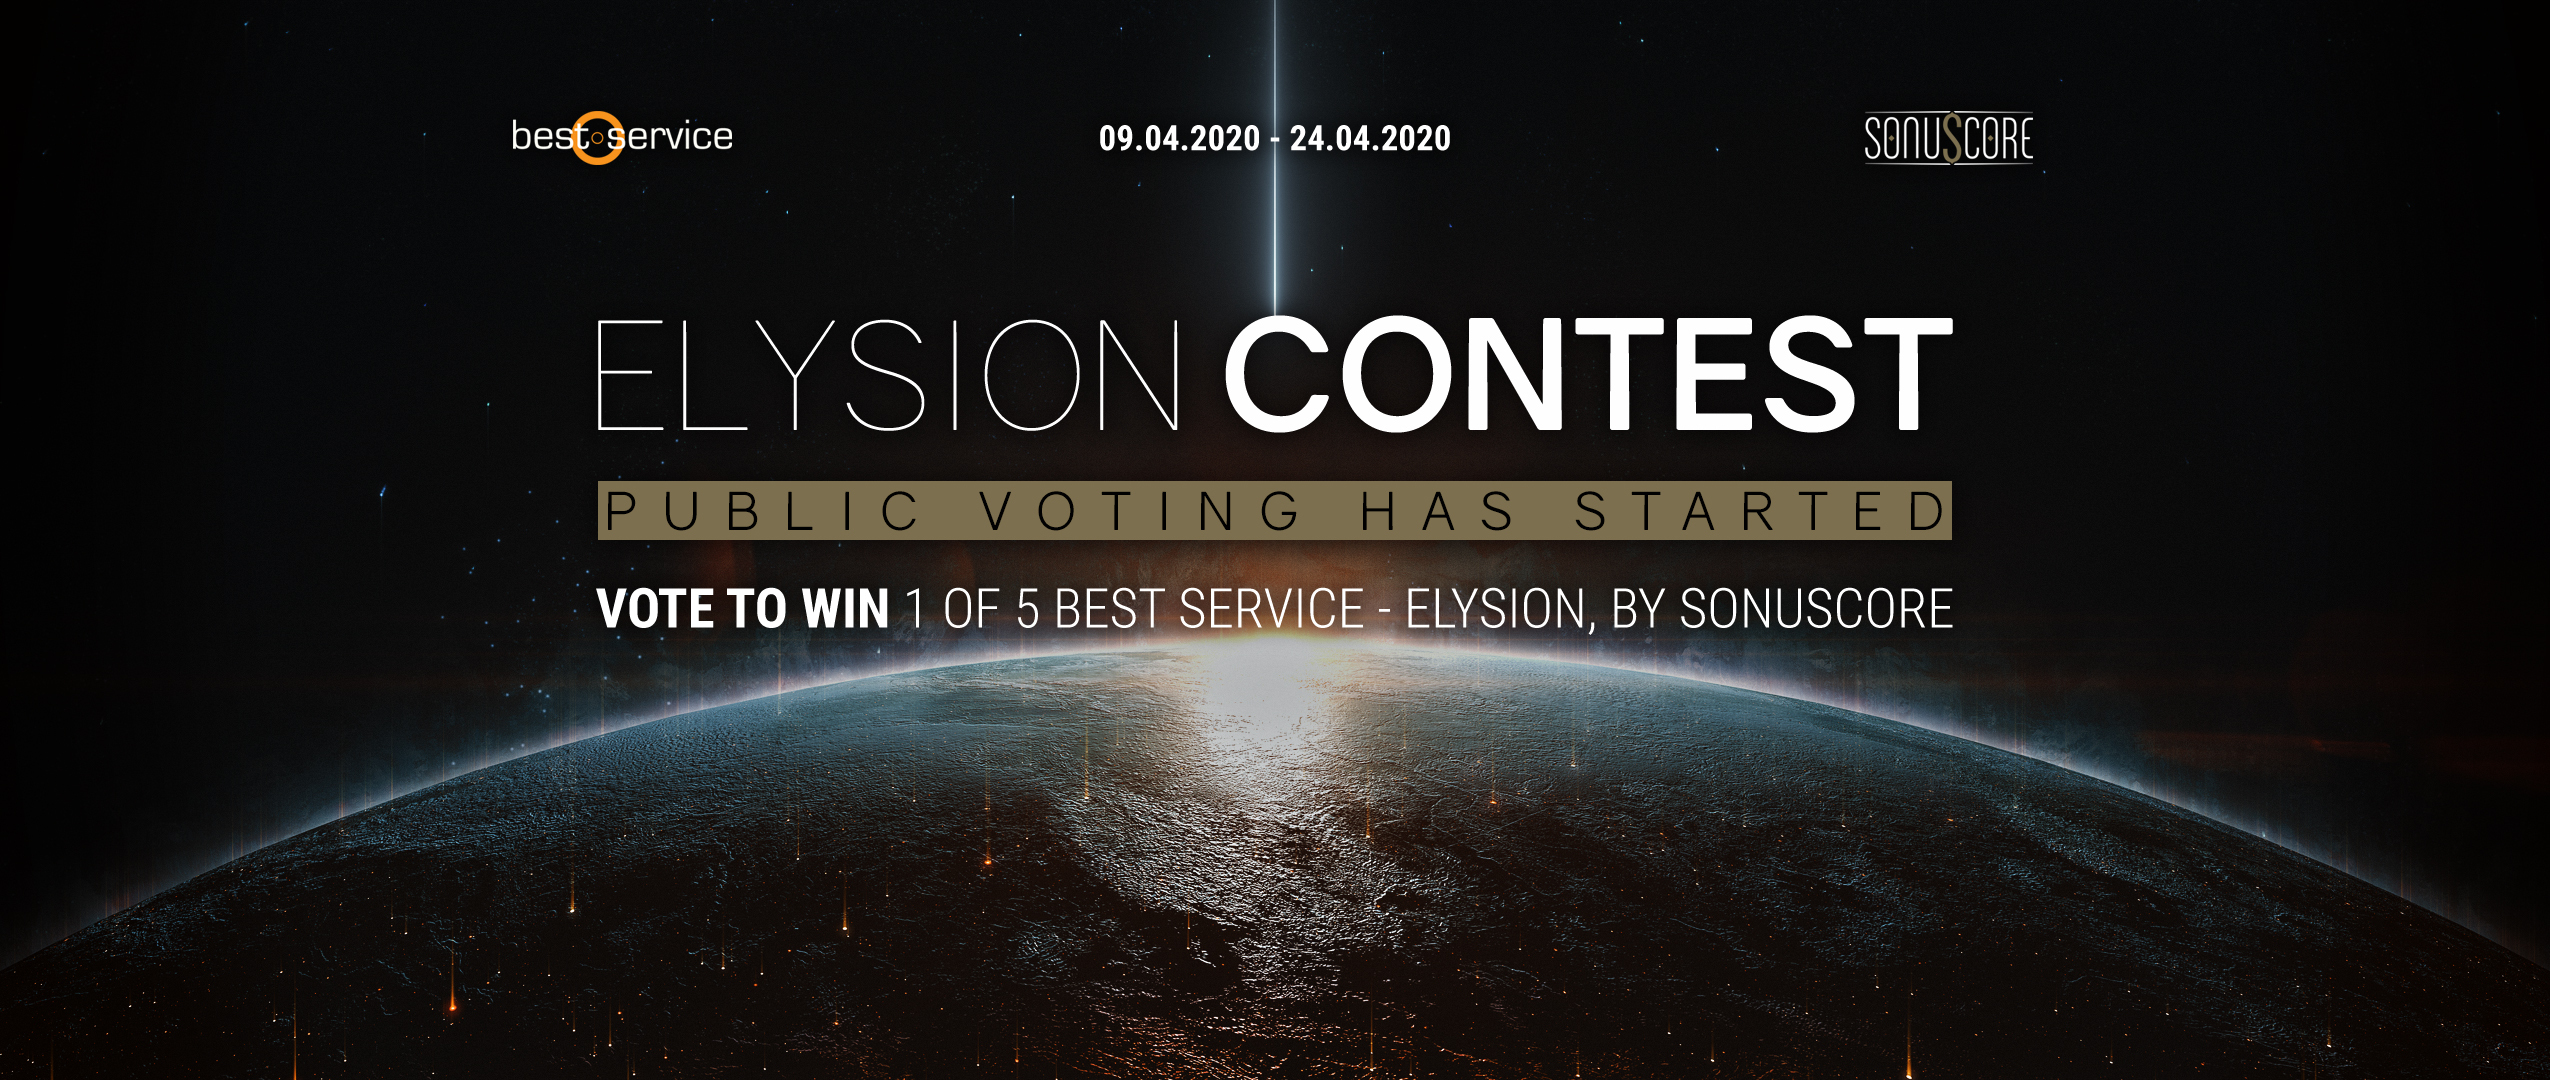 Sonuscore Elysion Contest Voting